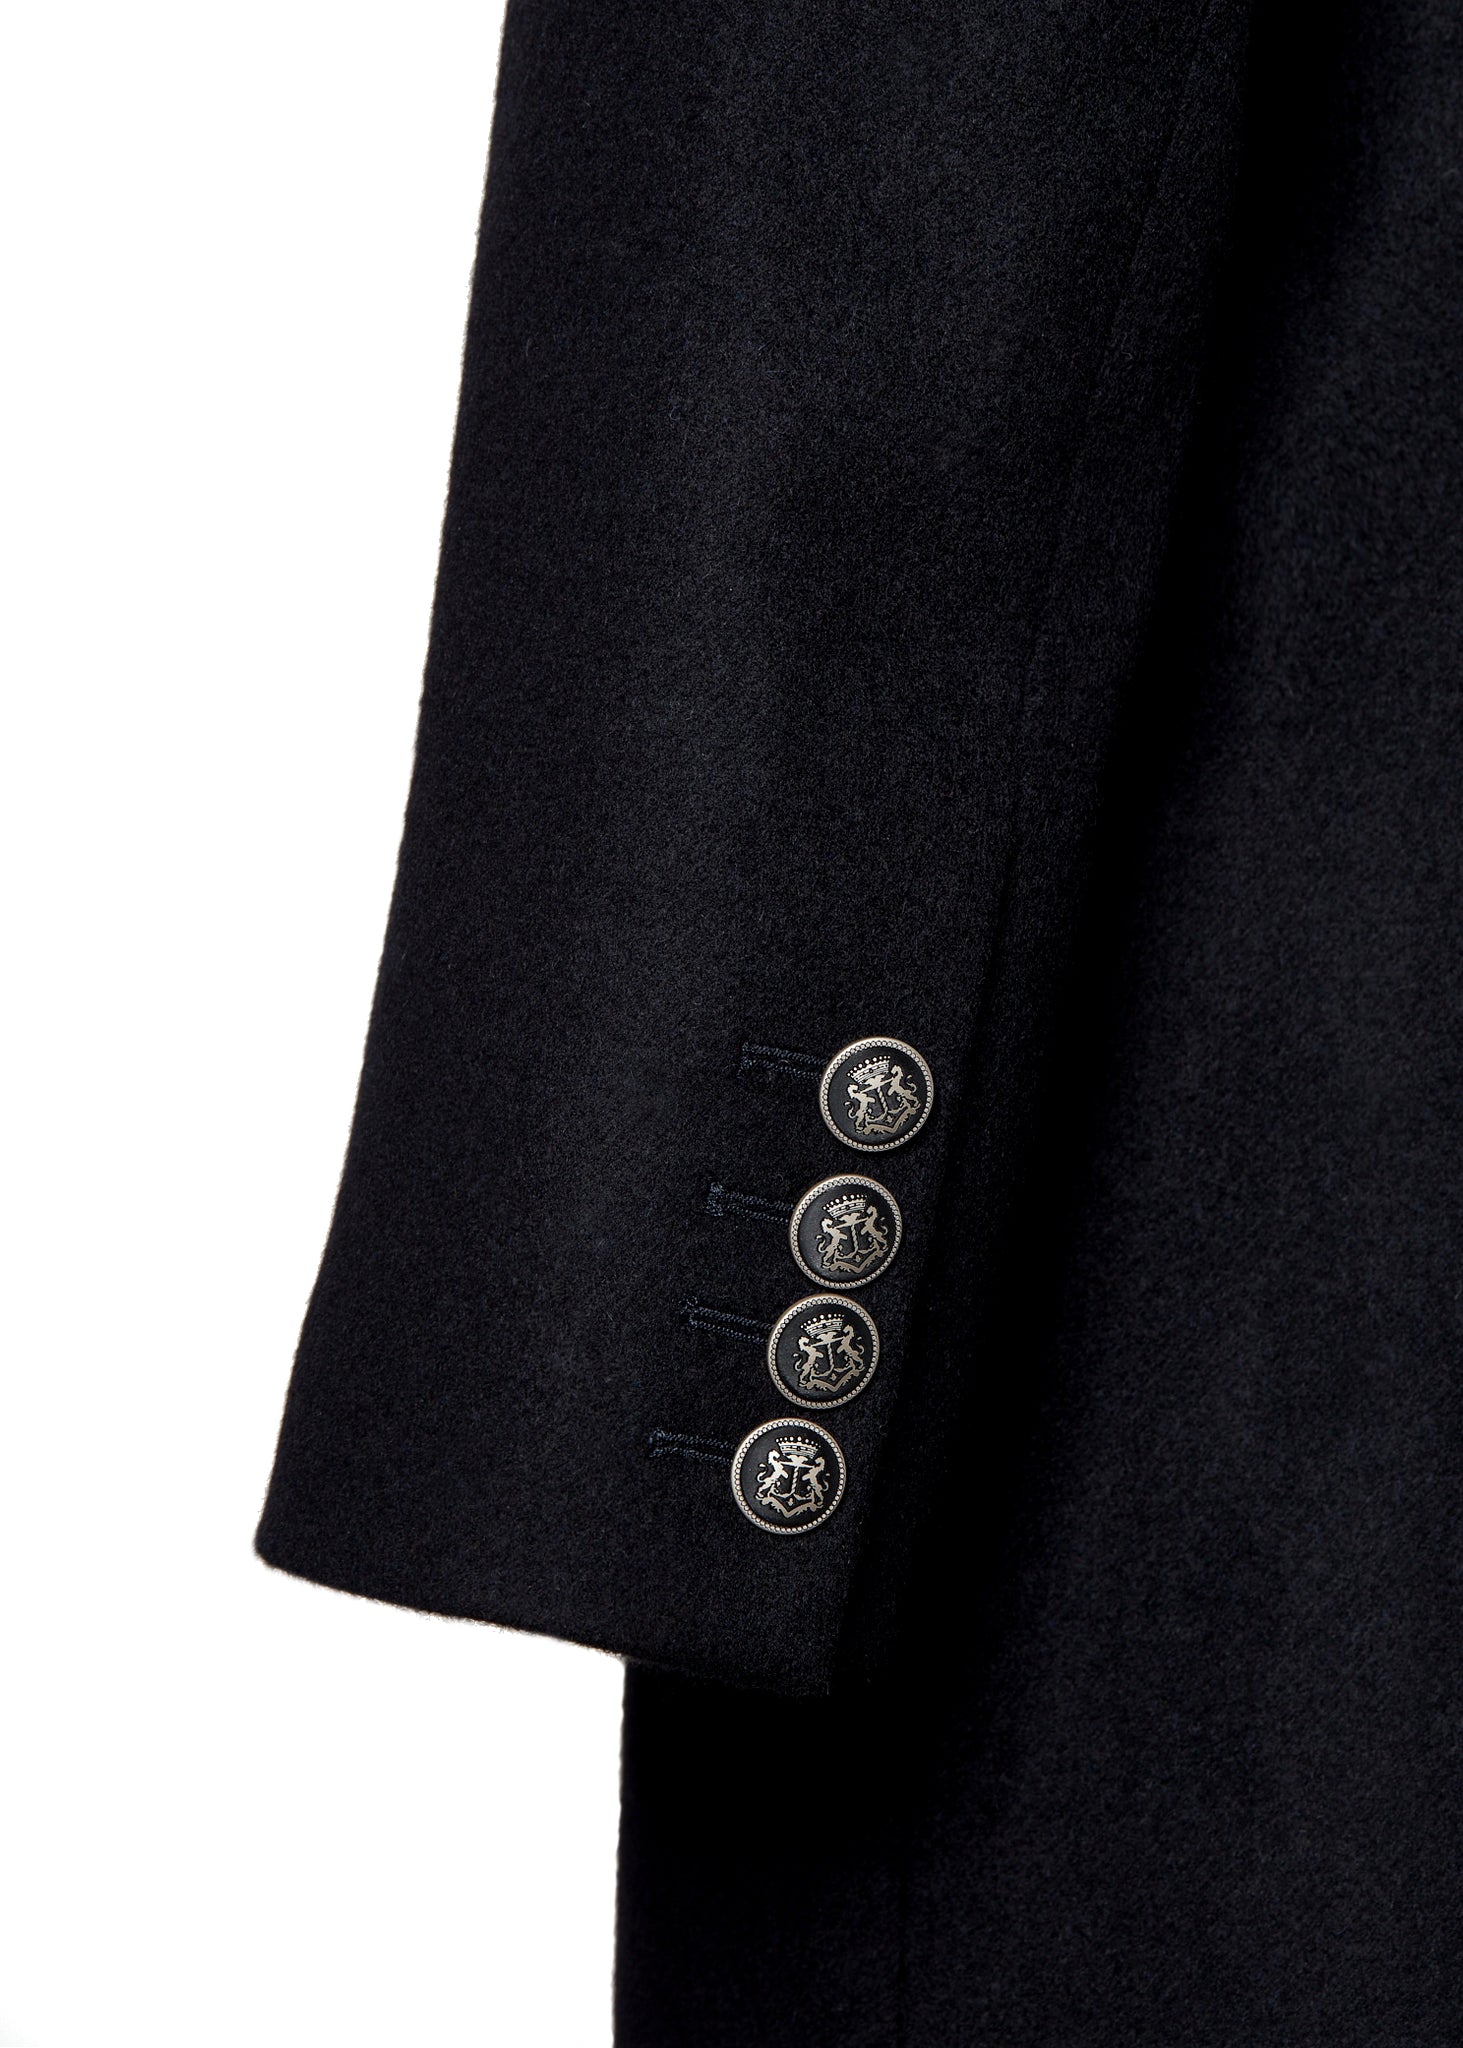 The Cheltenham Coat (Soft Black)